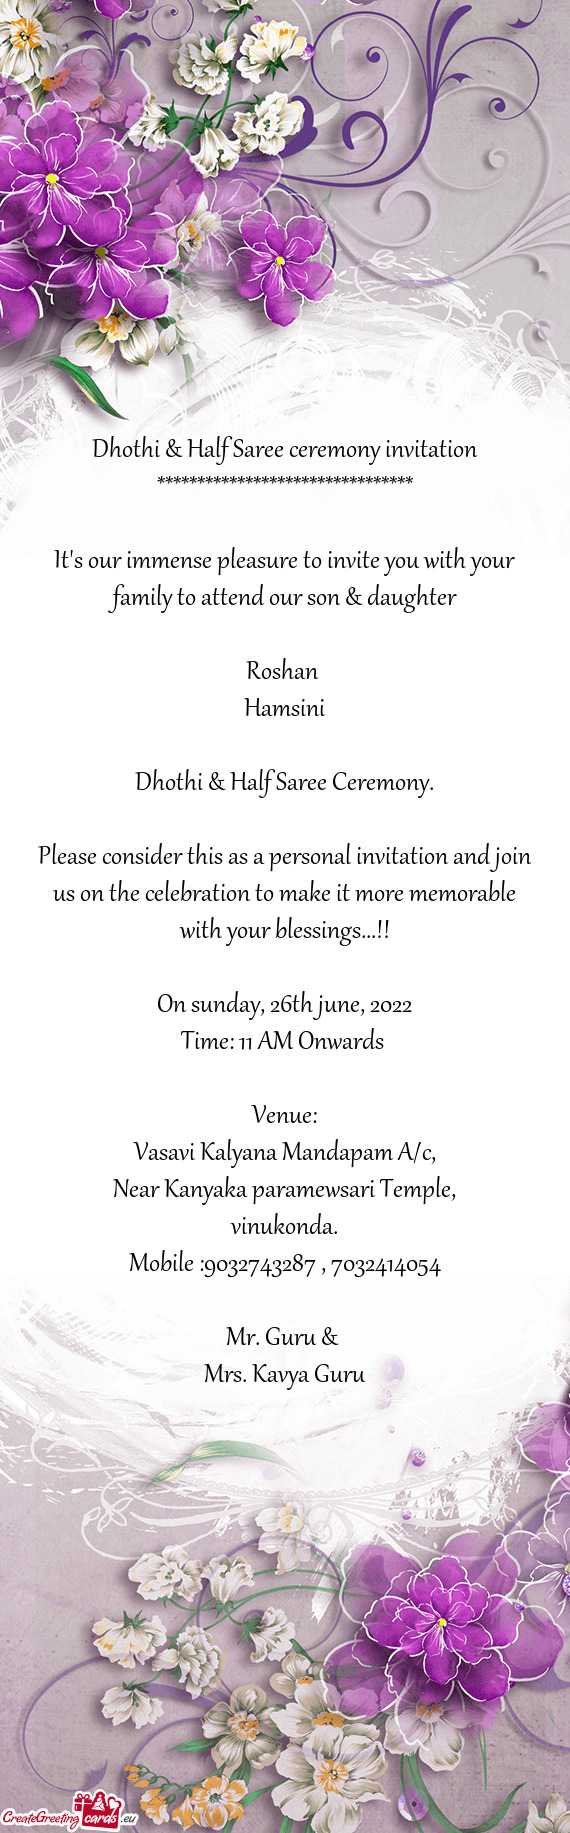 Dhothi & Half Saree Ceremony